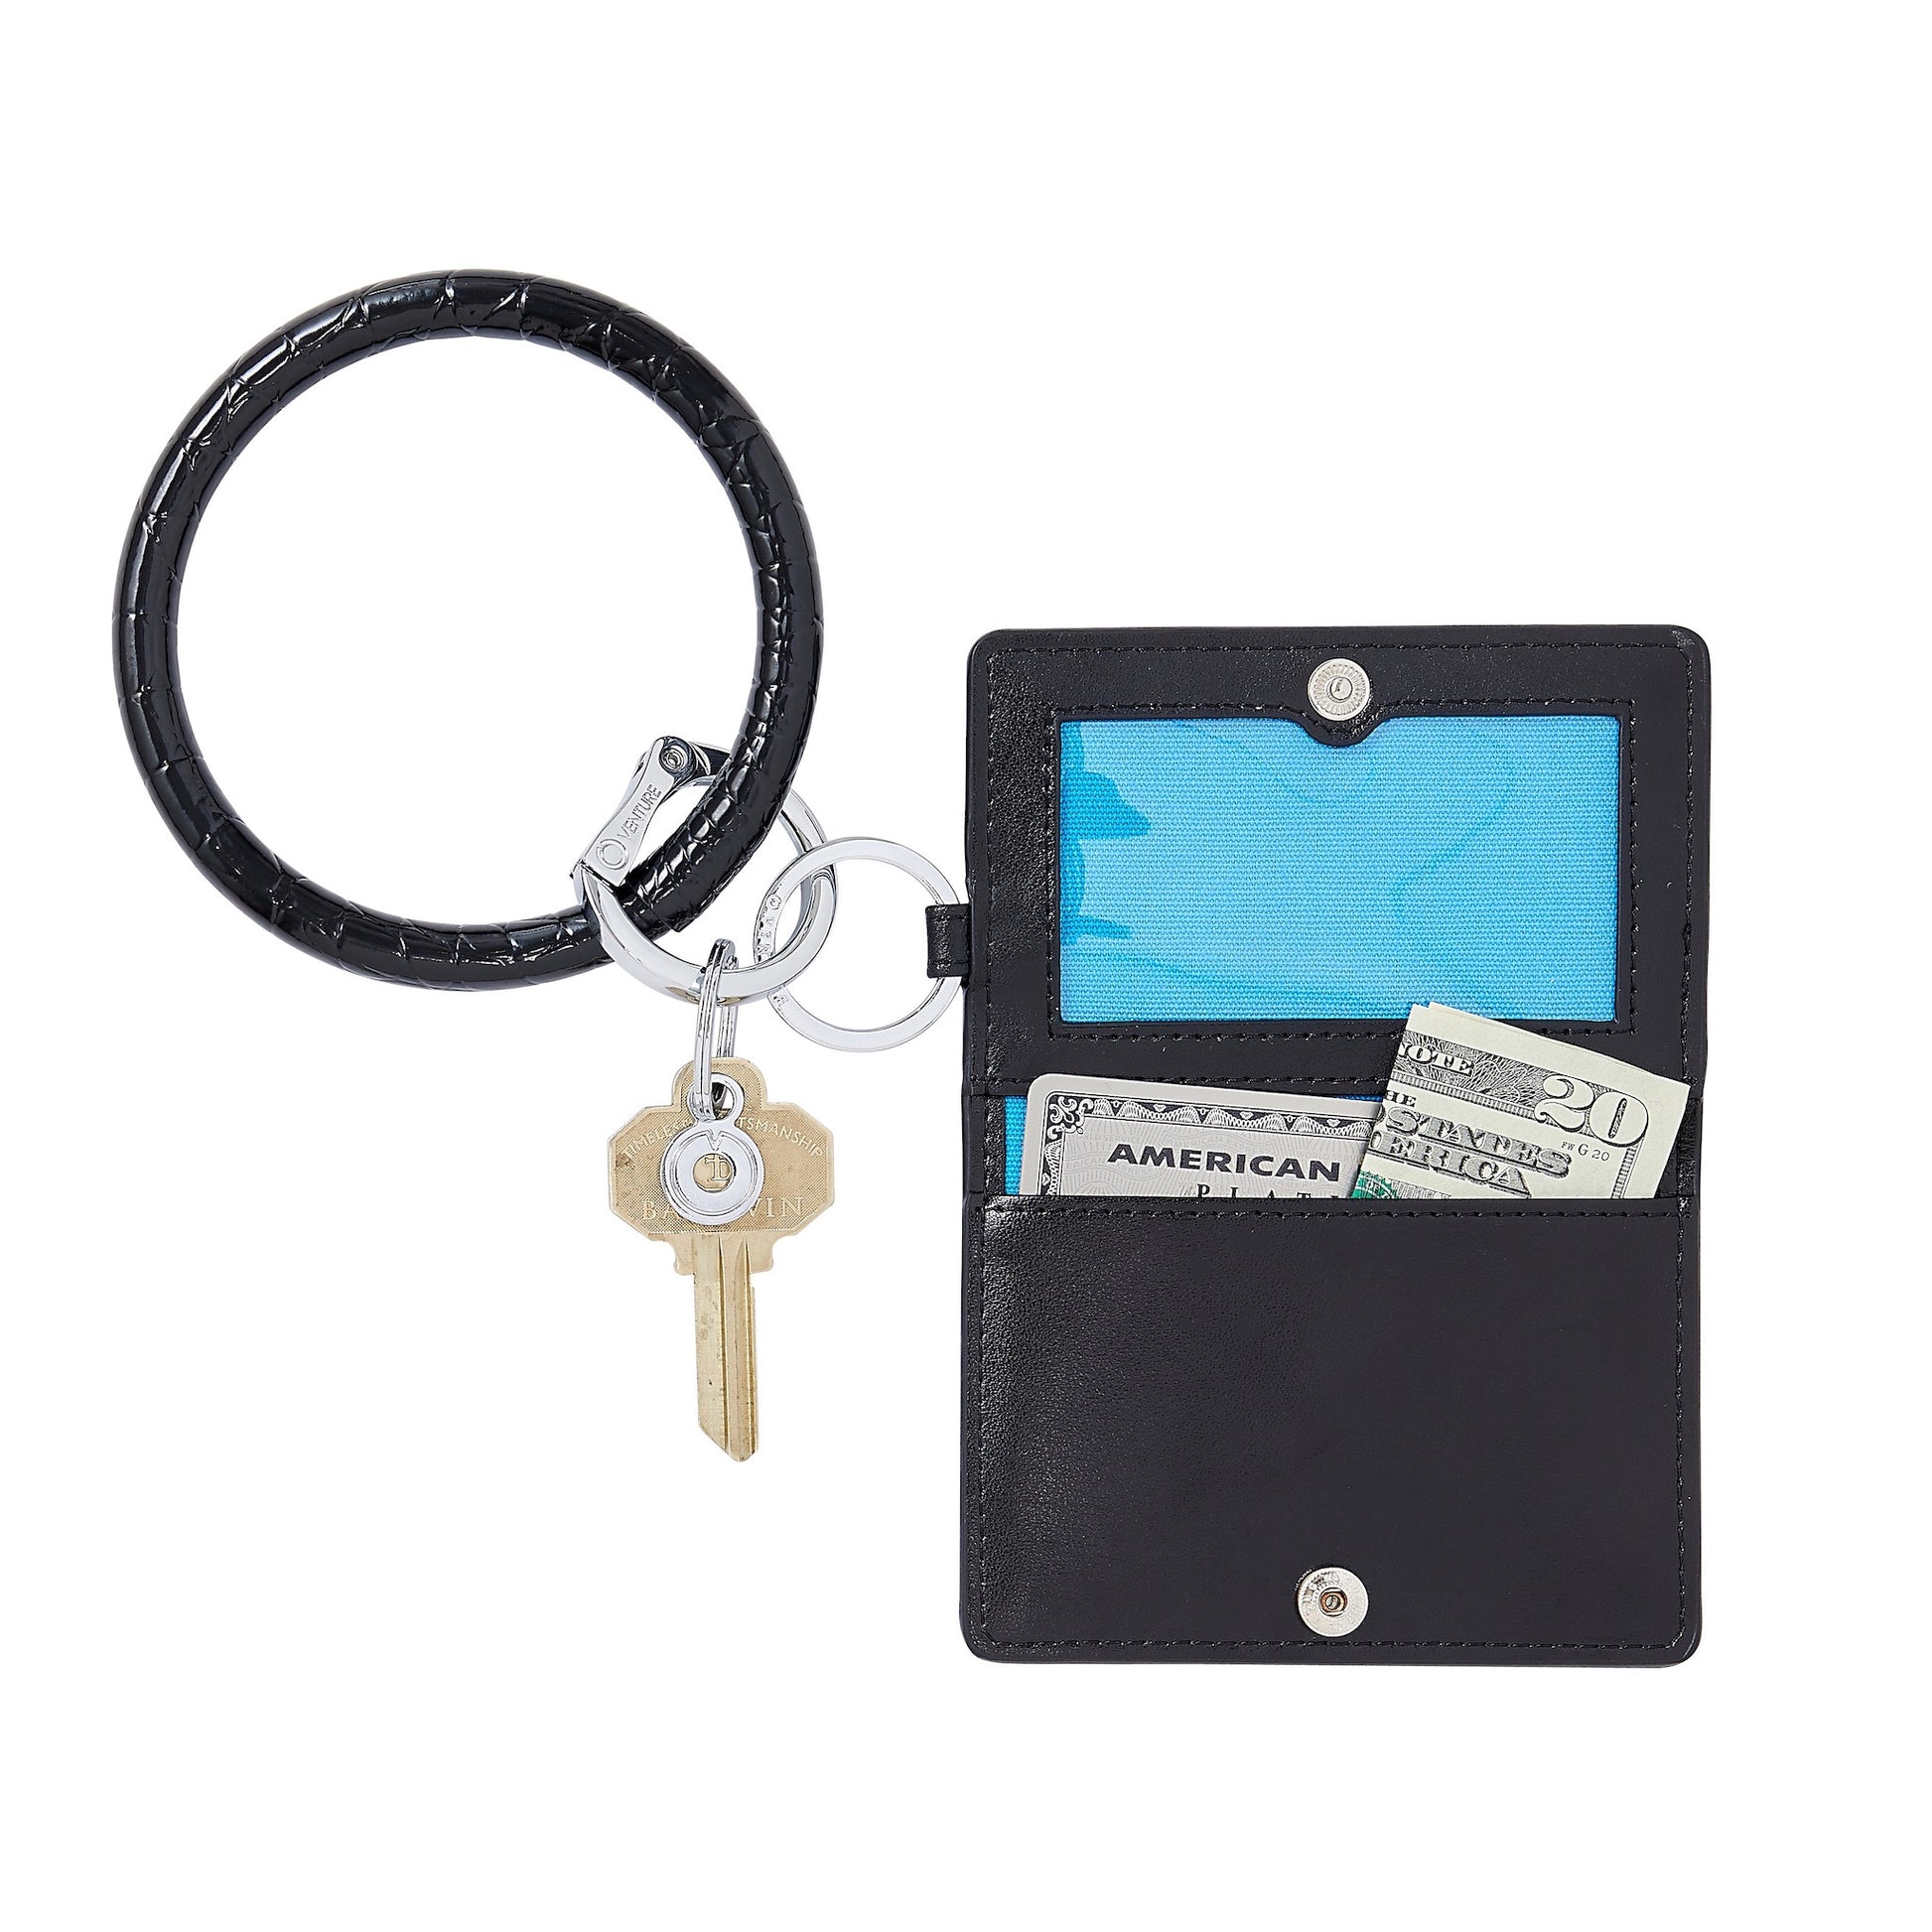 Sleek black leather bifold keychain wallet shown attached to a black bracelet keychain.